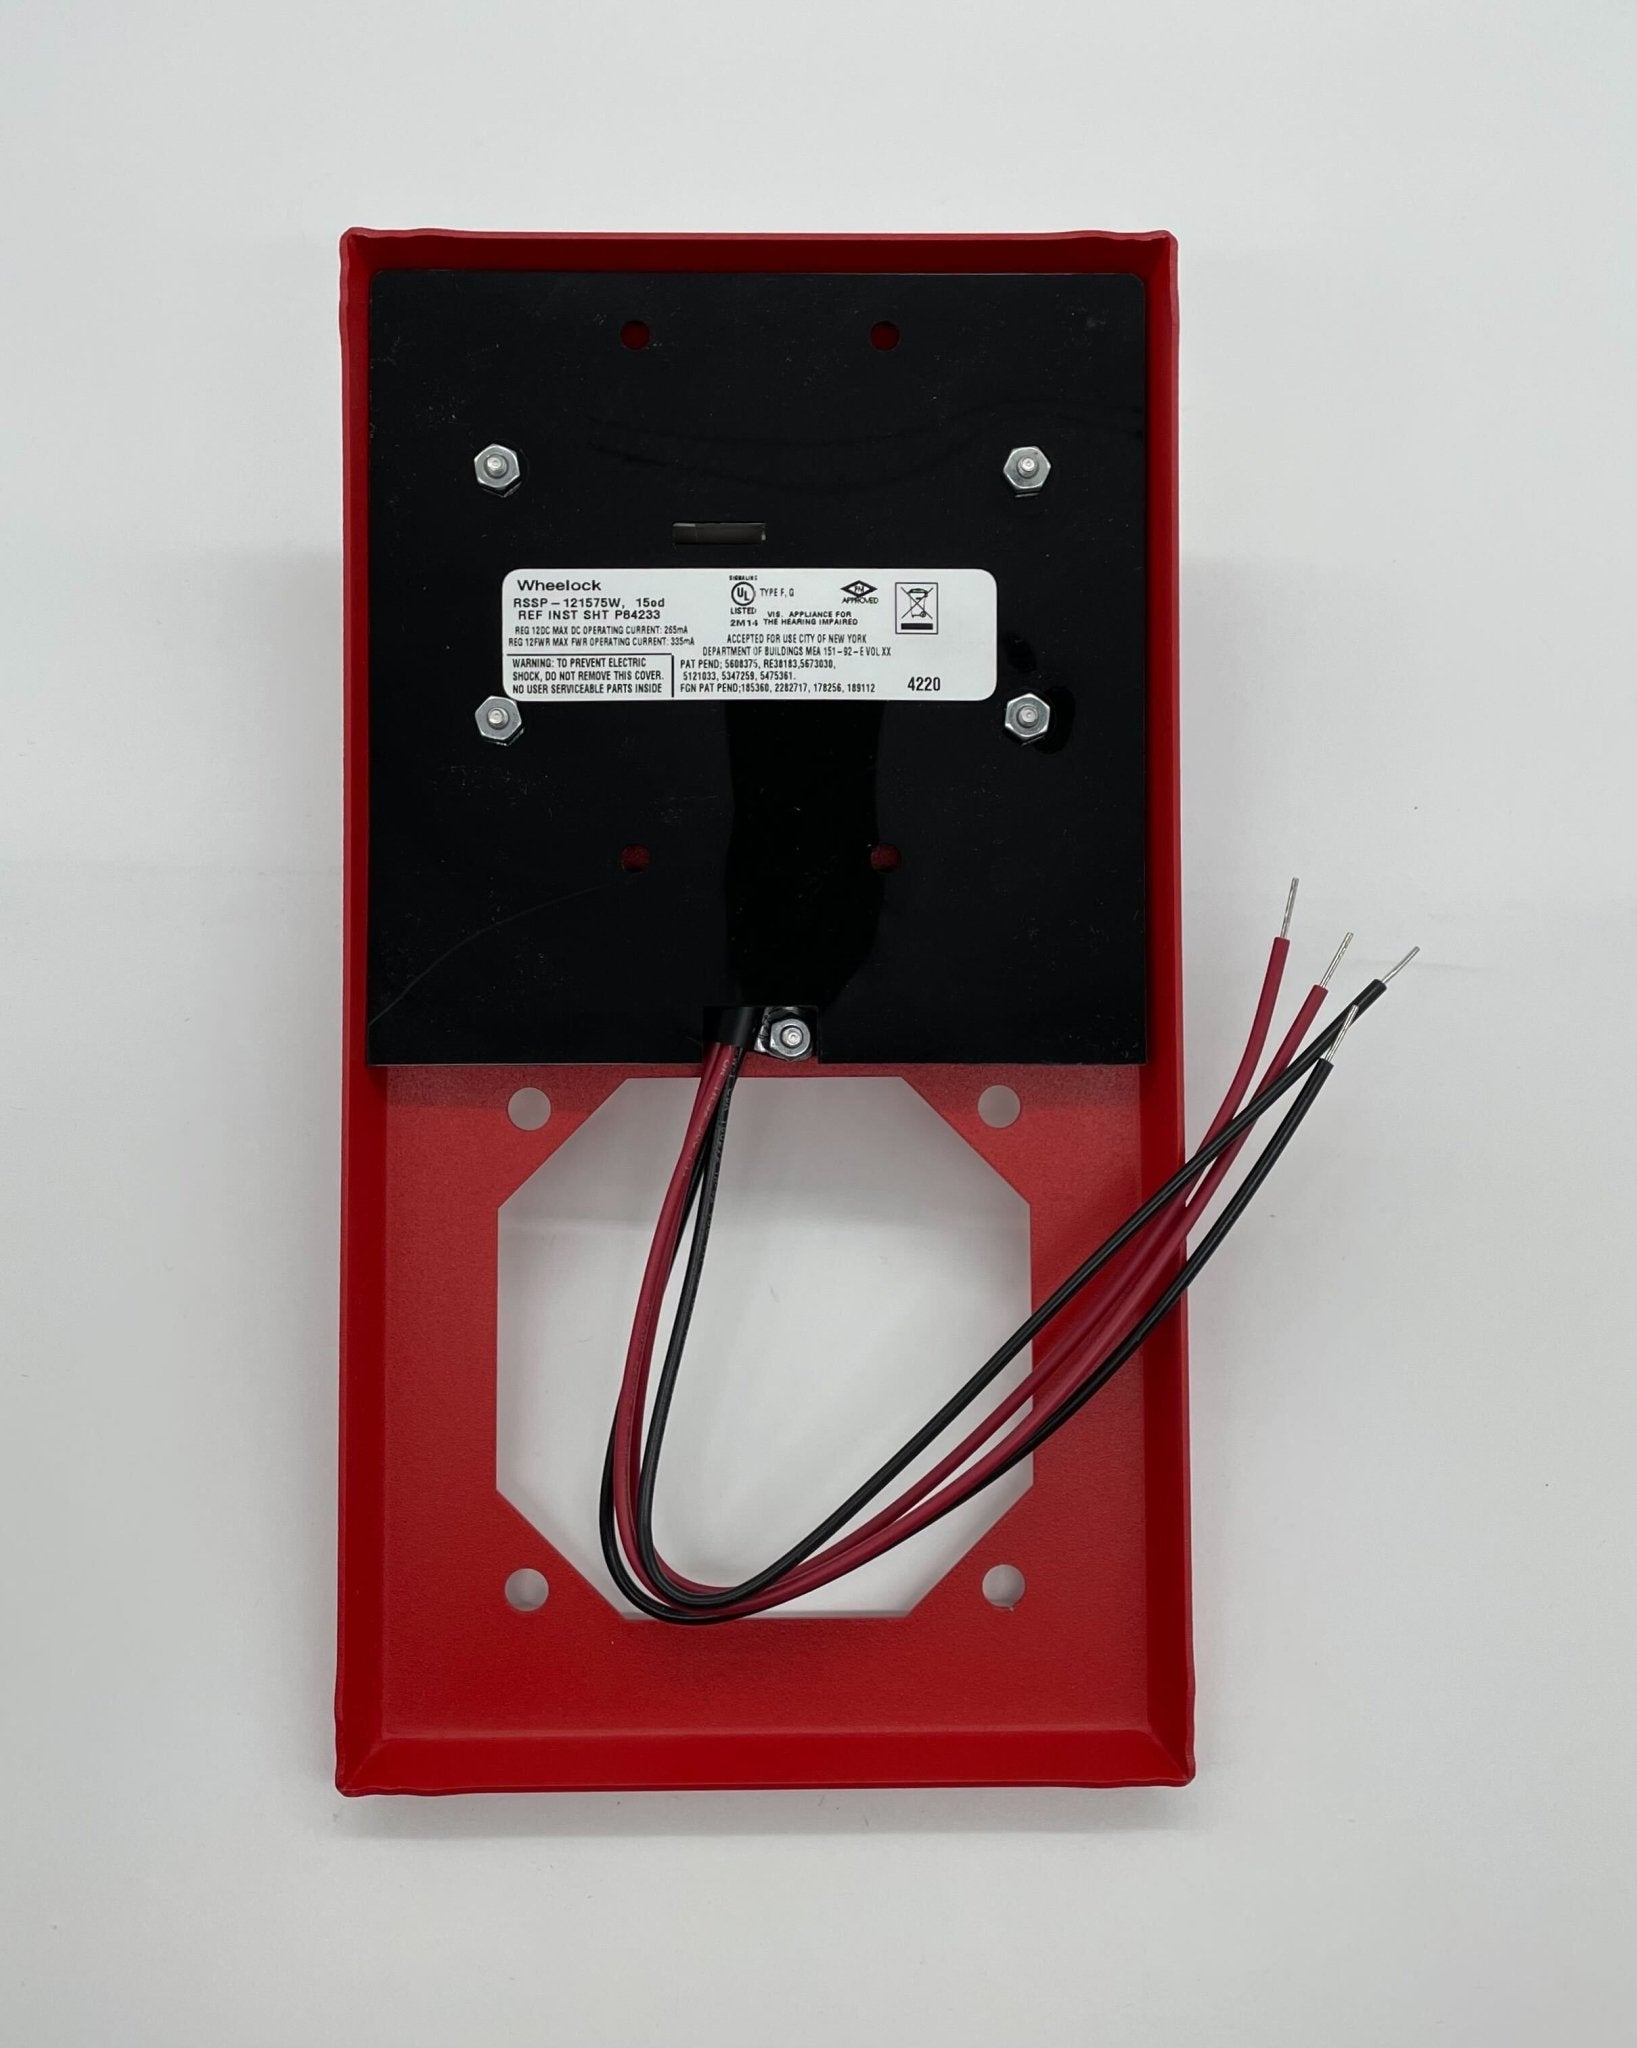 Wheelock RSSP-121575W-FR Strobe Plate Wall Mount - The Fire Alarm Supplier